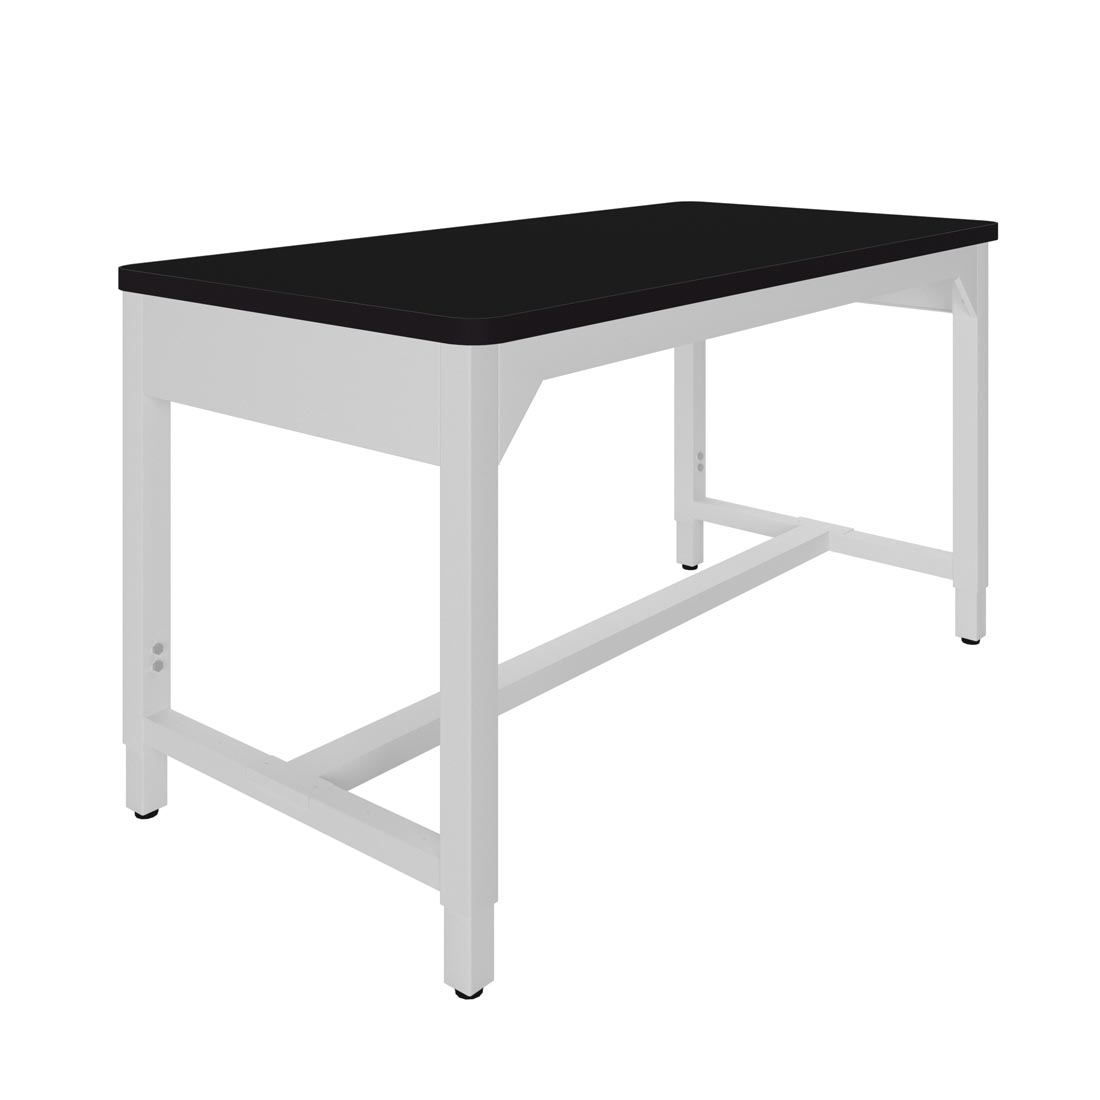 Adjustable Metal Table with Black Top